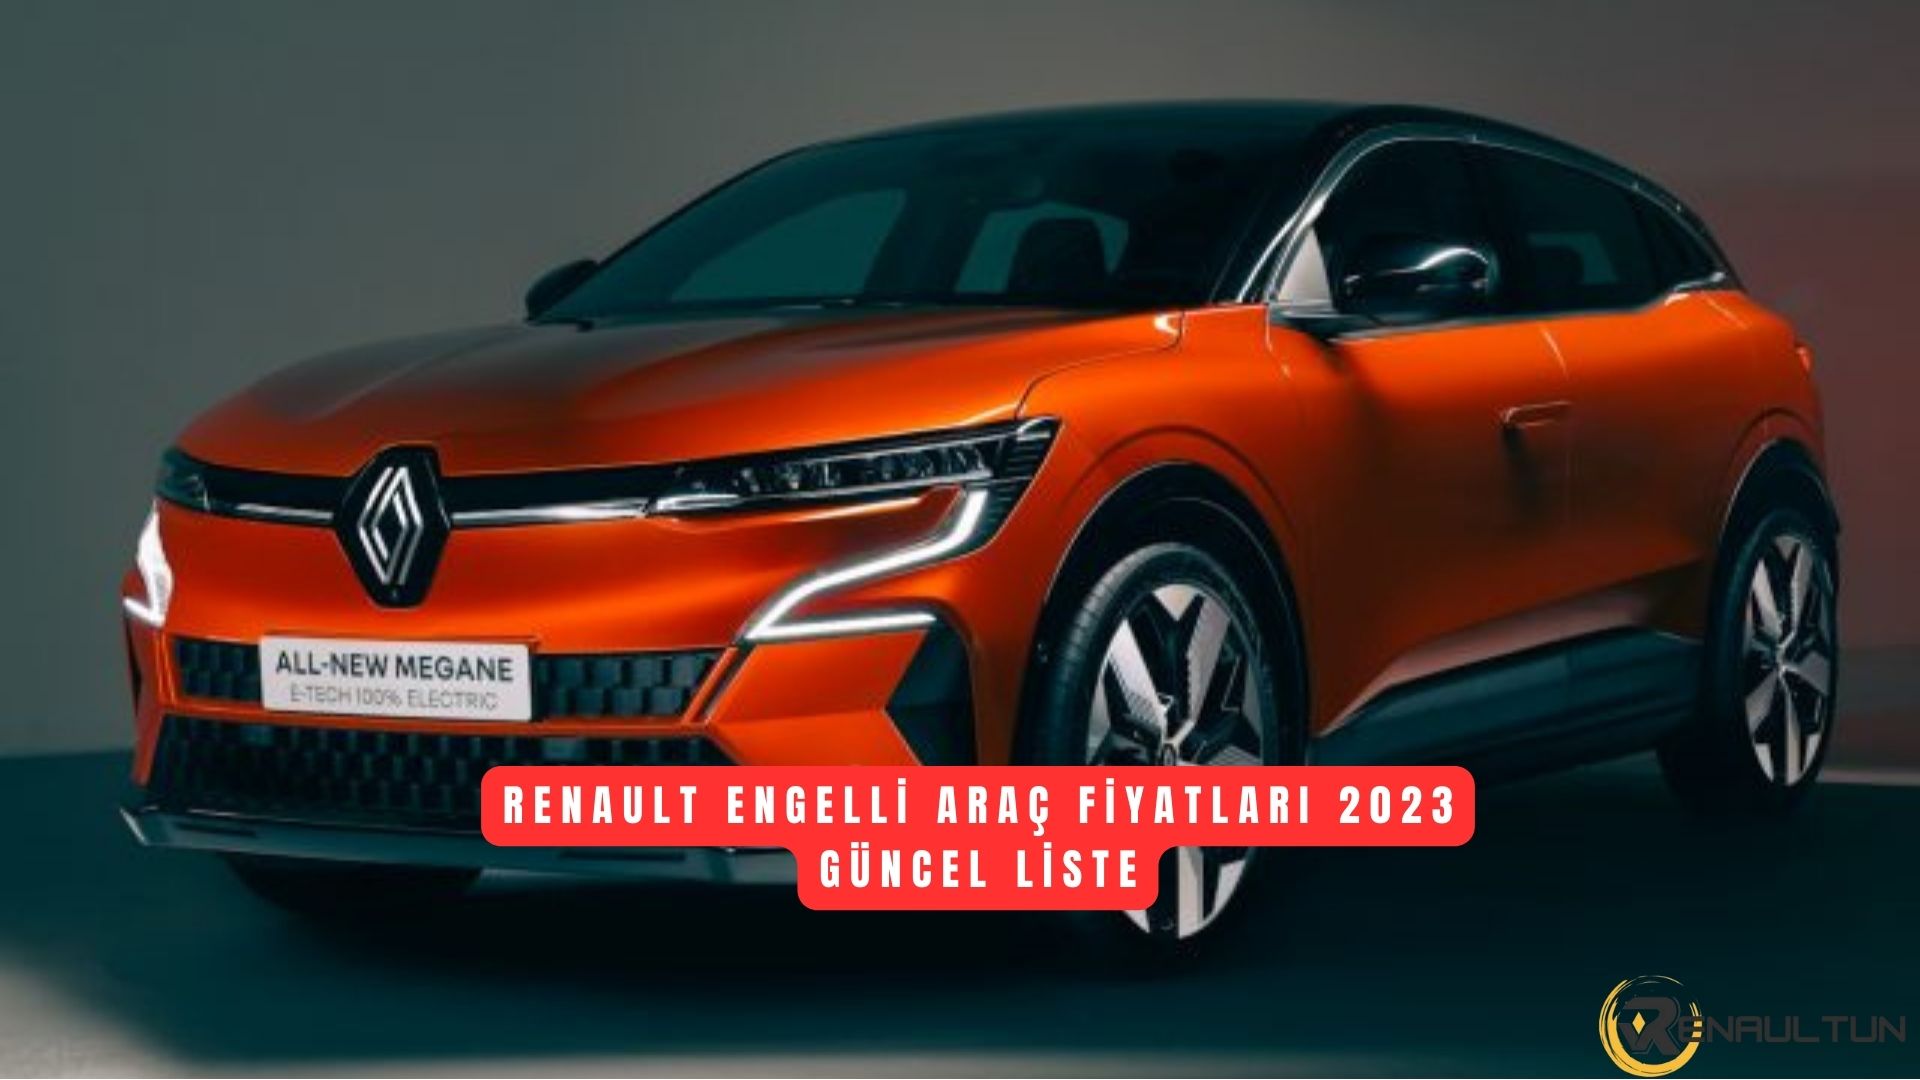 Renault Engelli Araç Fiyat Listesi 2023